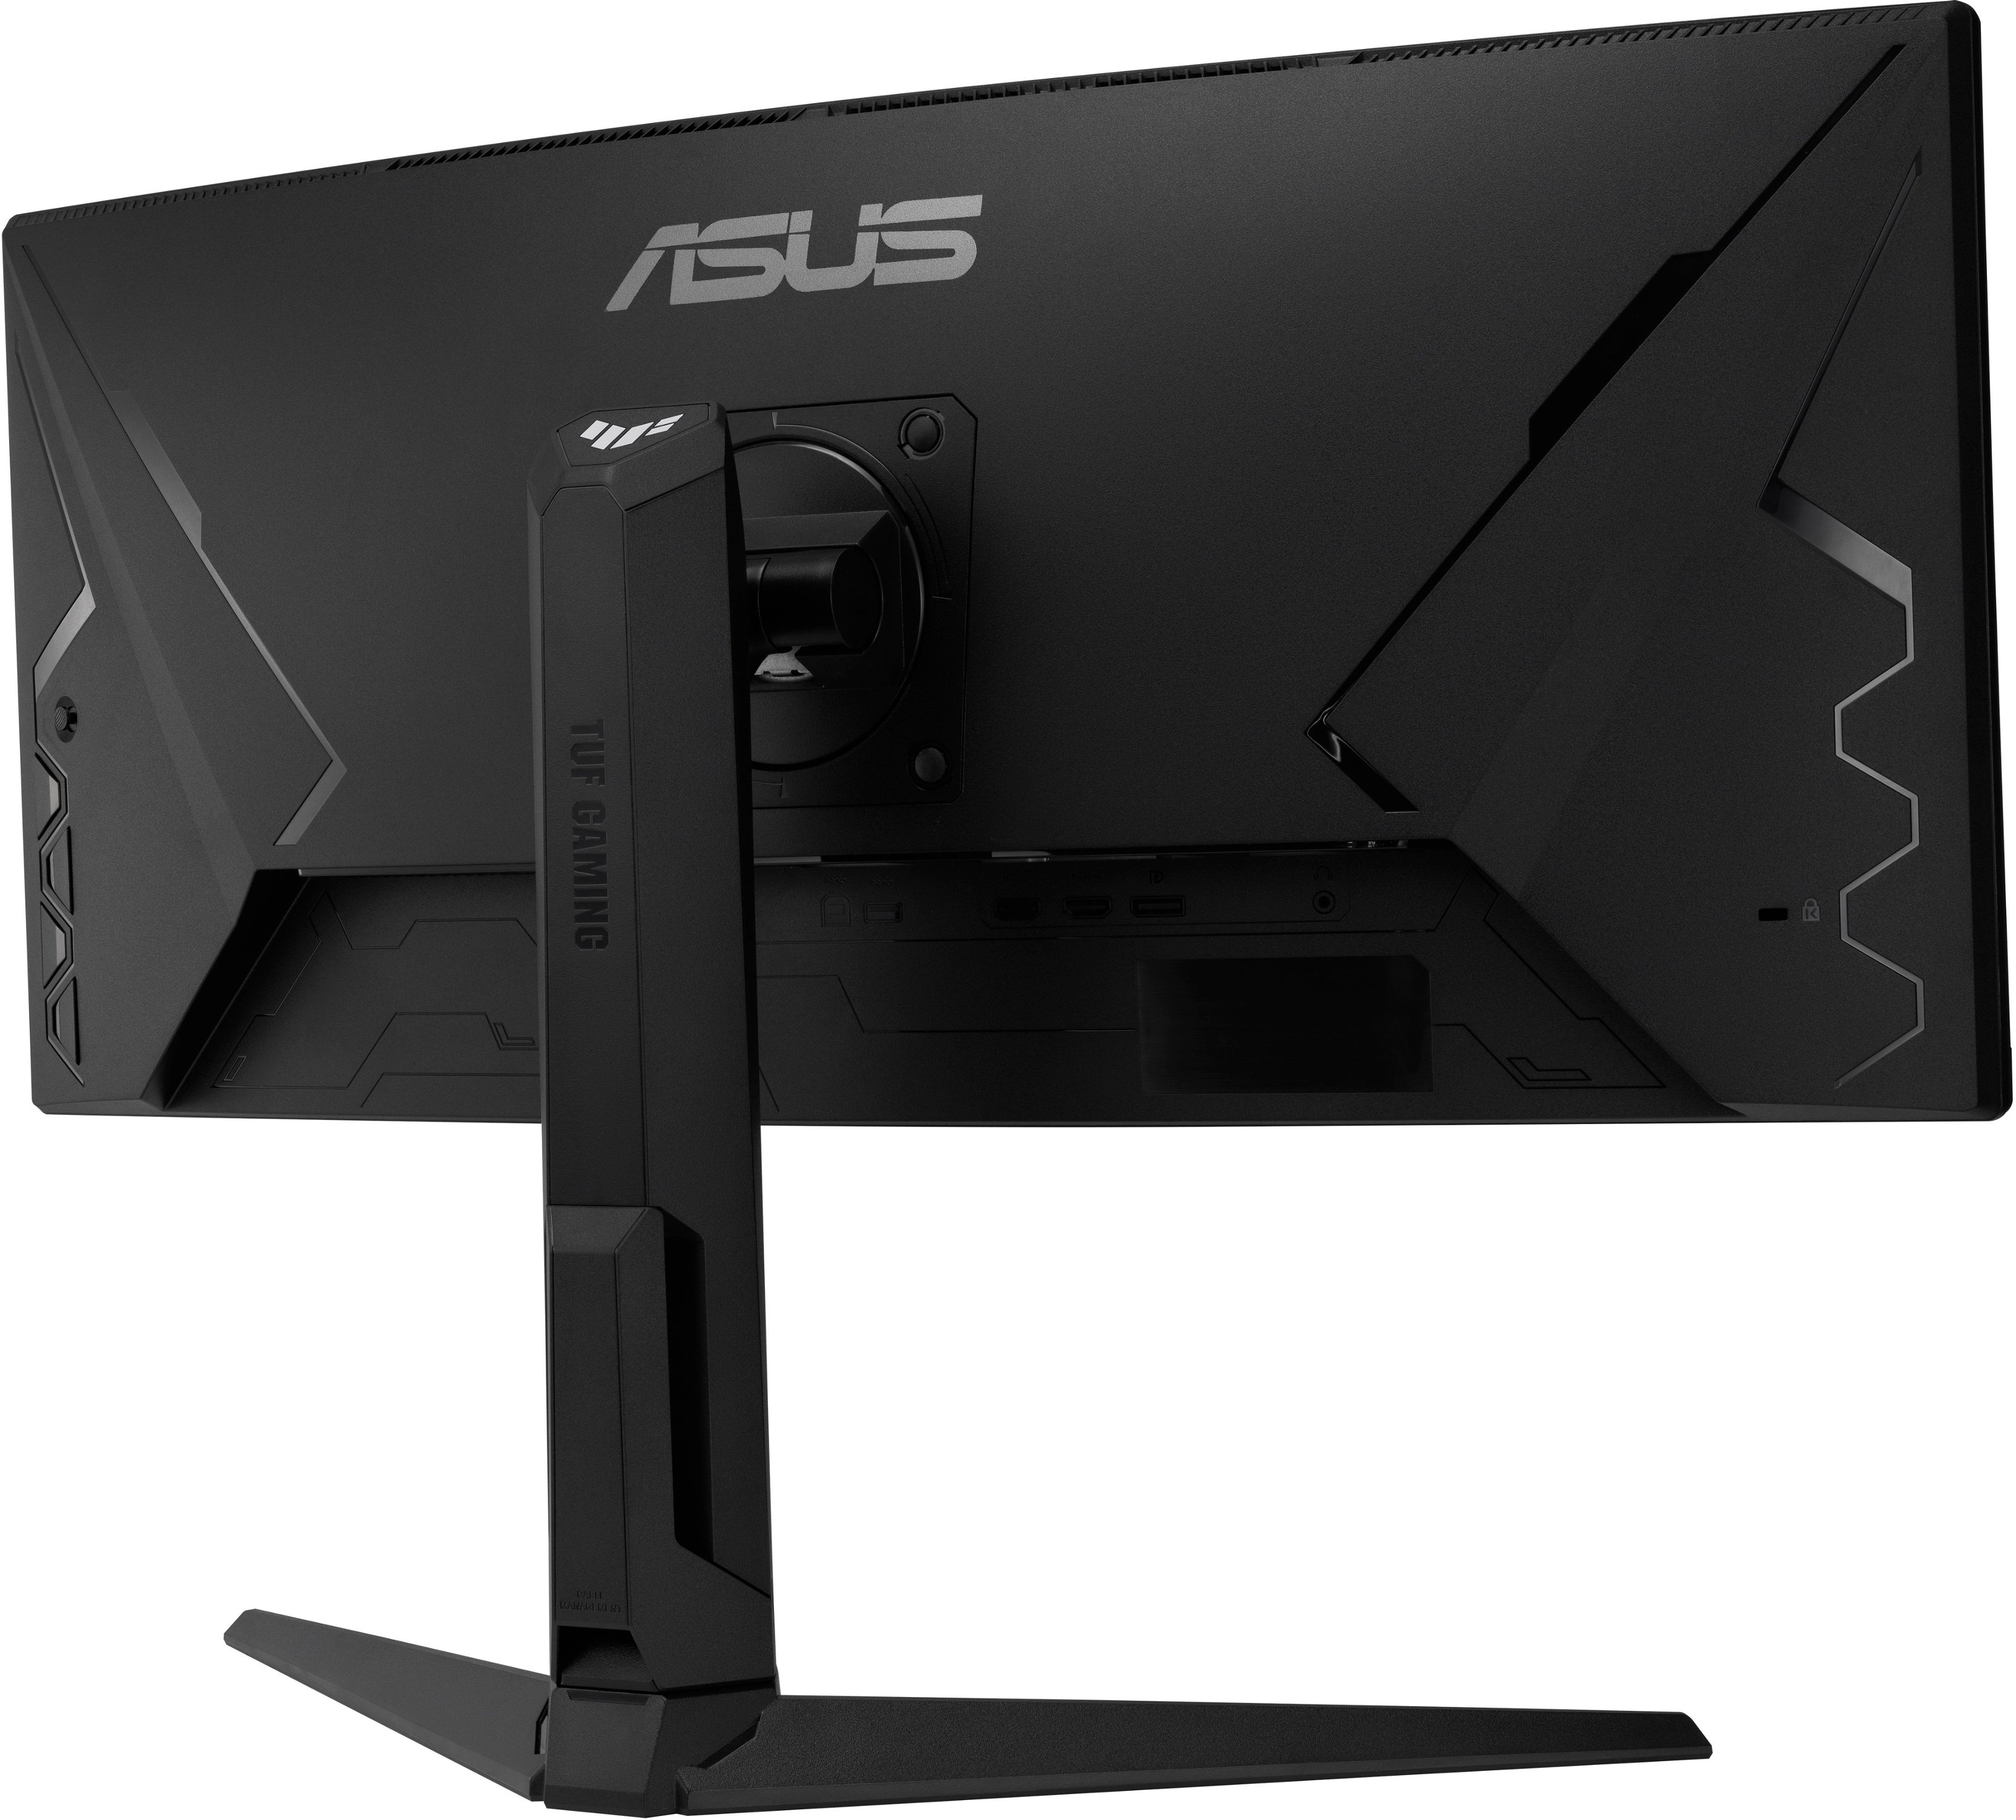 Back View: ASUS - TUF Gaming 24" LCD Curved FreeSync Monitor (DisplayPort, HDMI) - Black